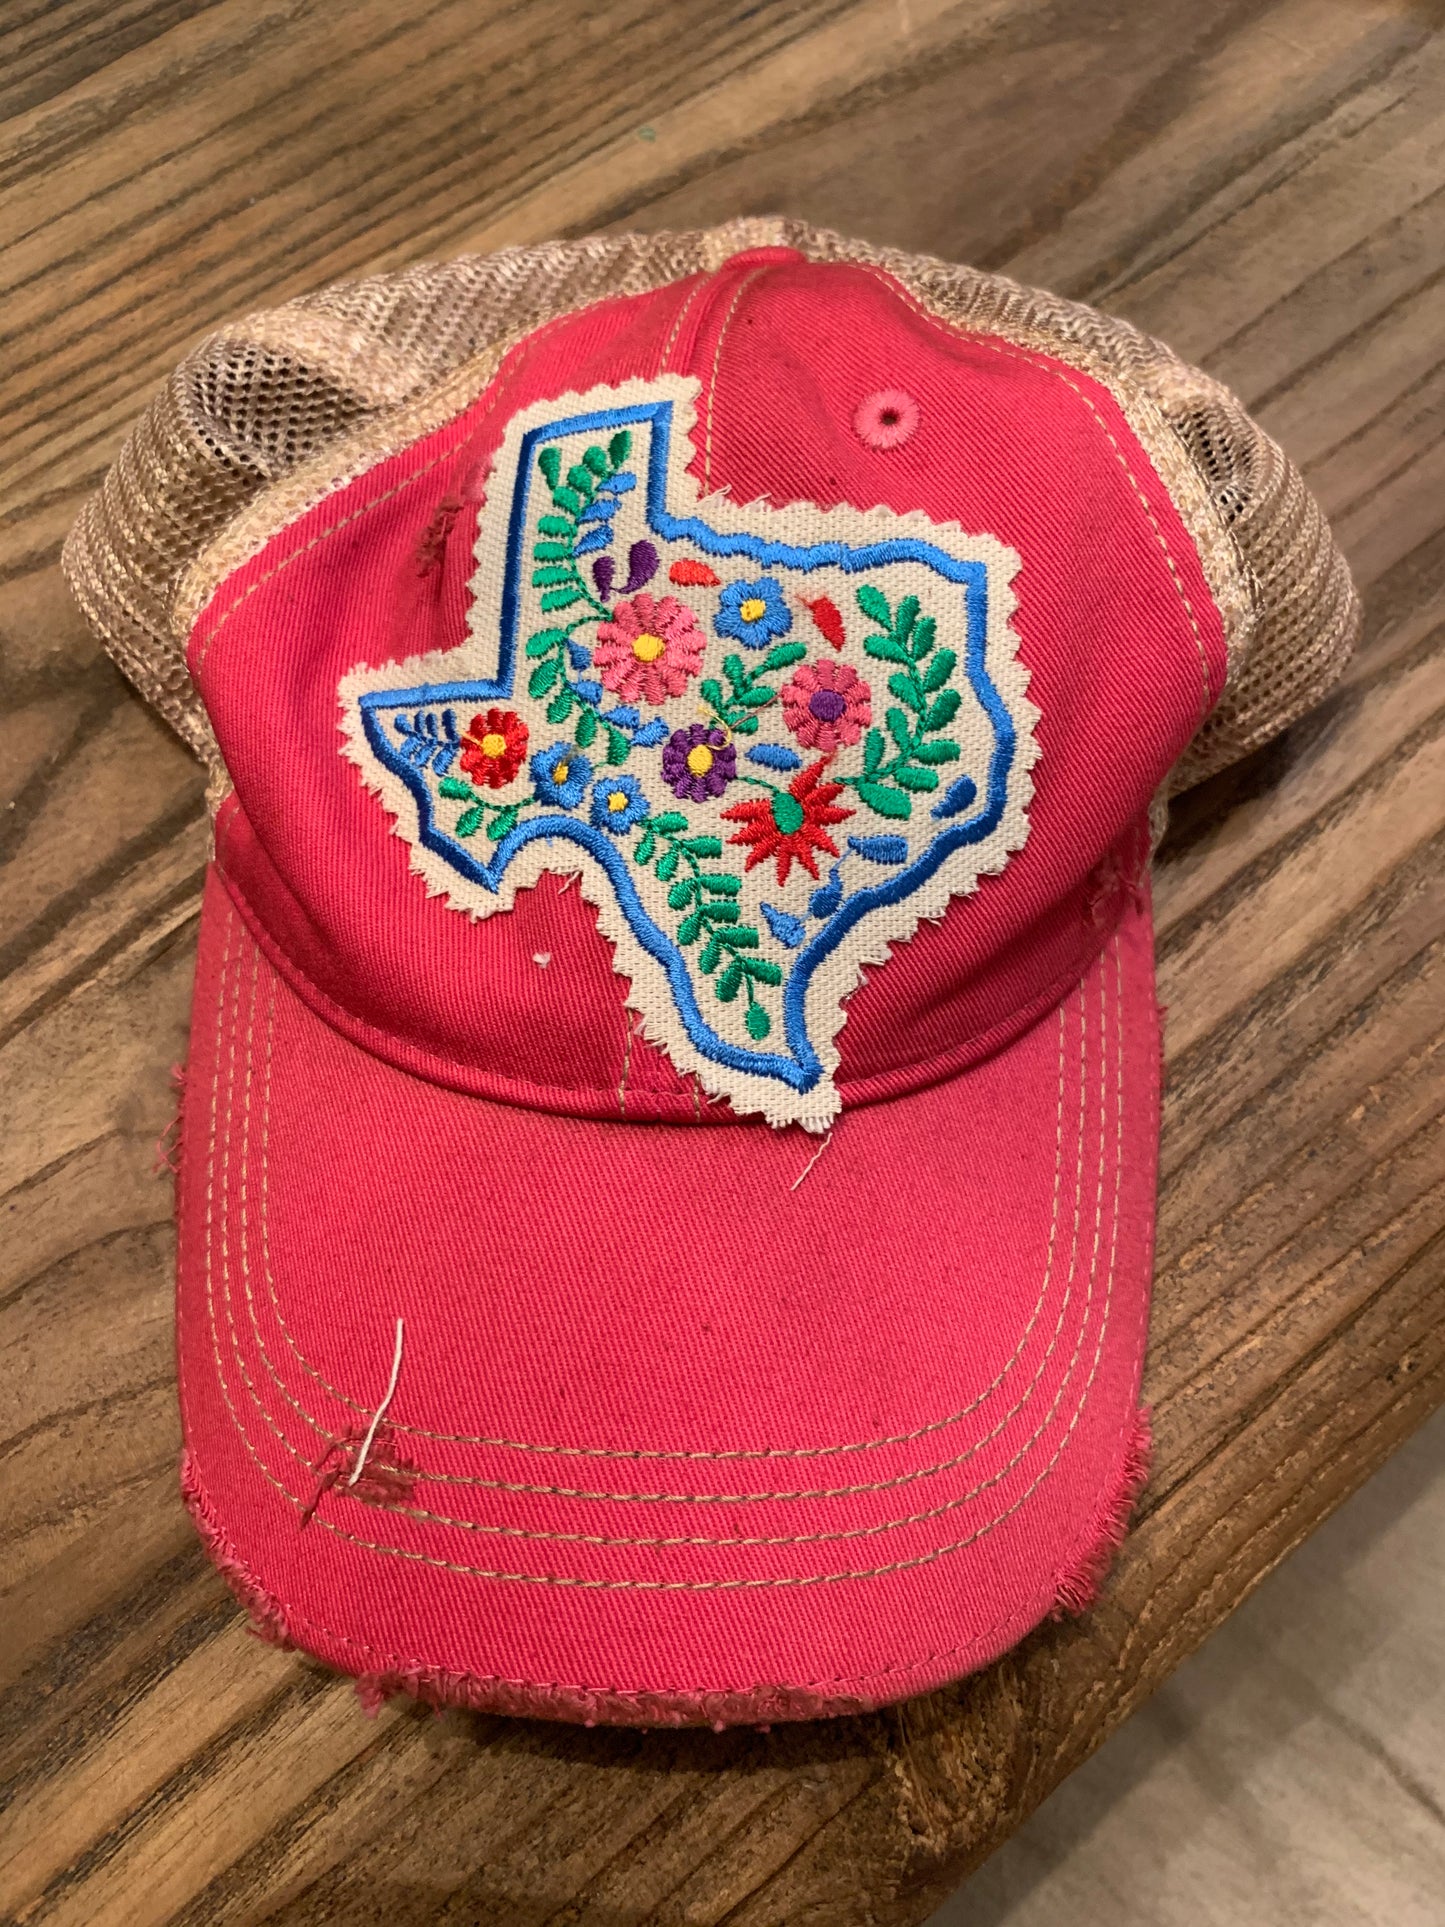 Texas Floral on Hot Pink Distressed Vintage Hat